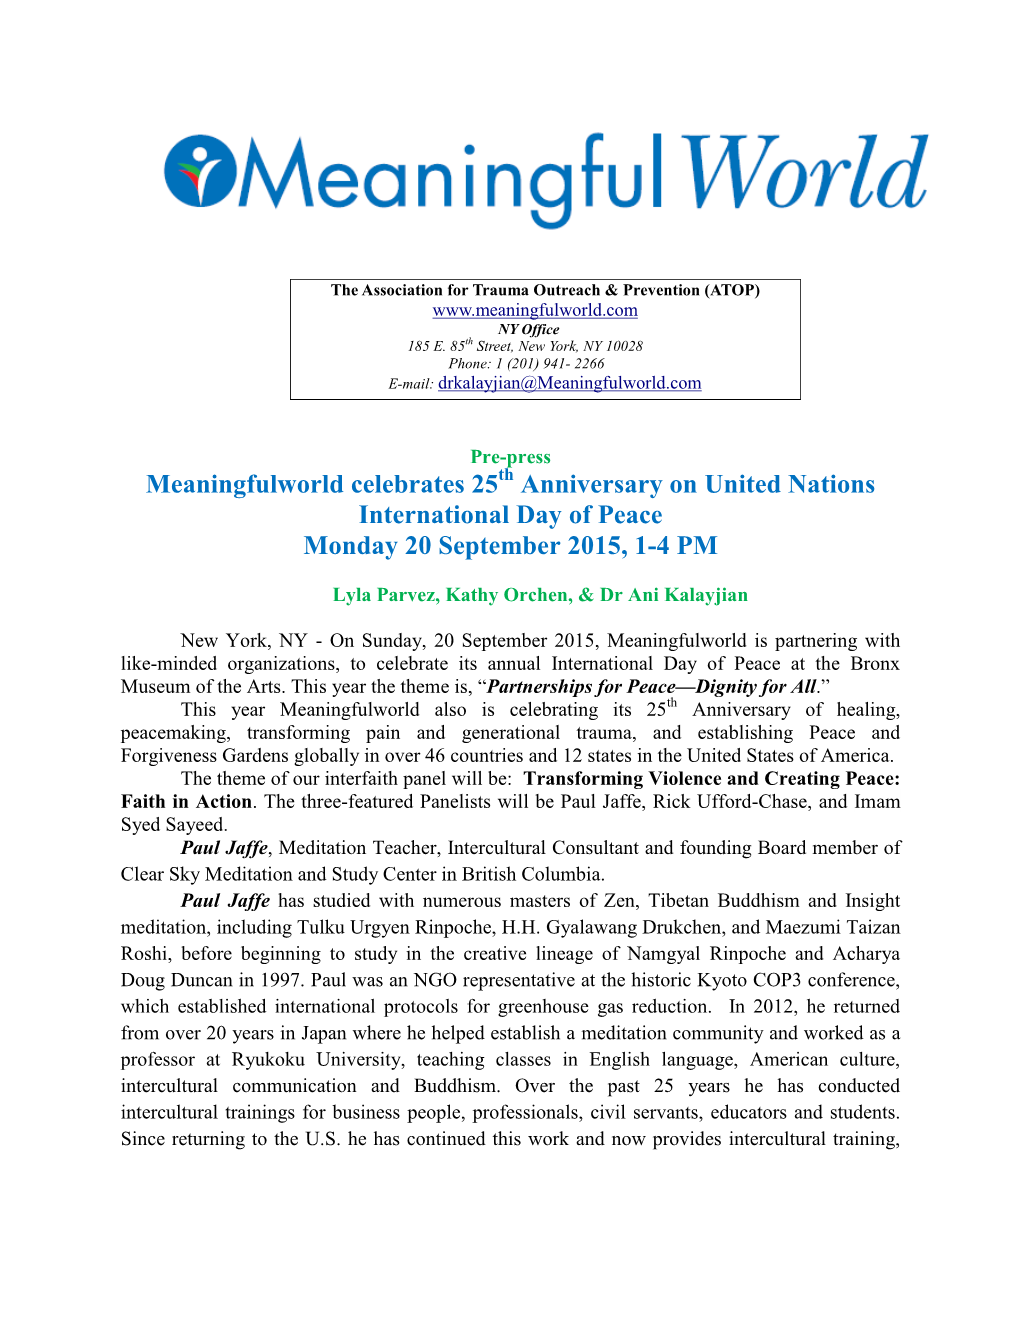 Meaningfulworld Celebrates 25 Anniversary on United Nations